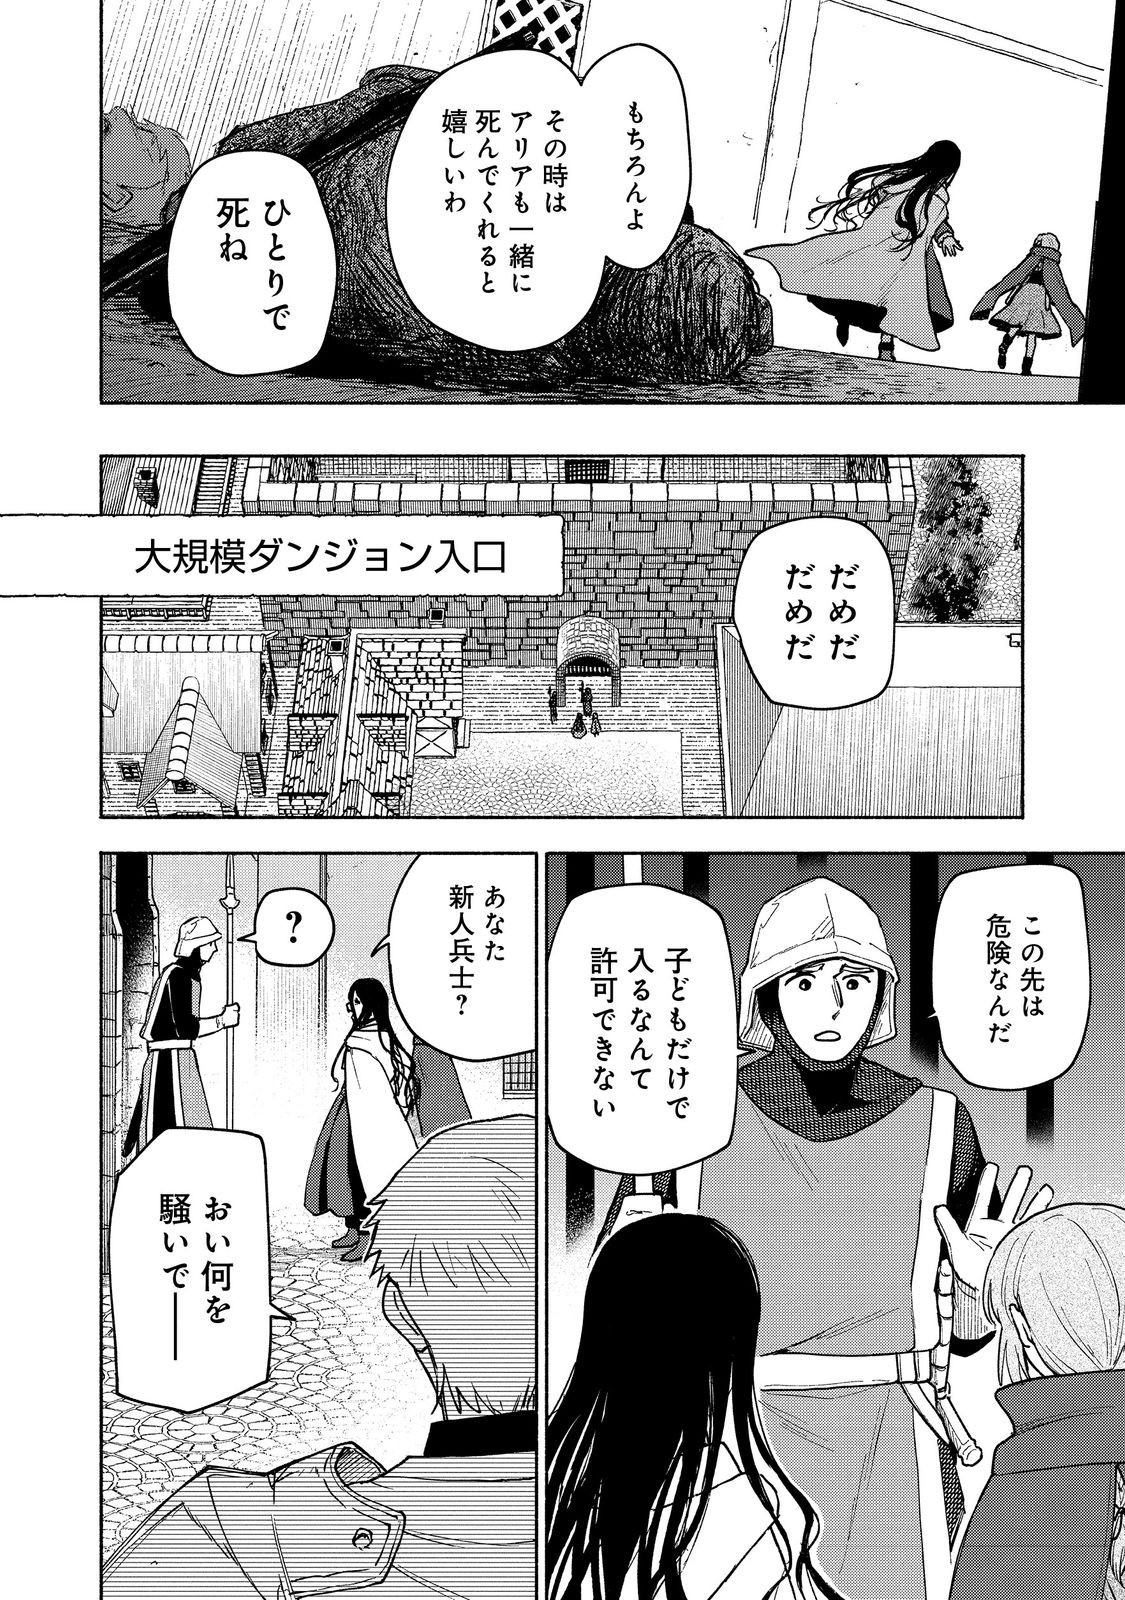 Otome Game no Heroine de Saikyou Survival - Chapter 23 - Page 8